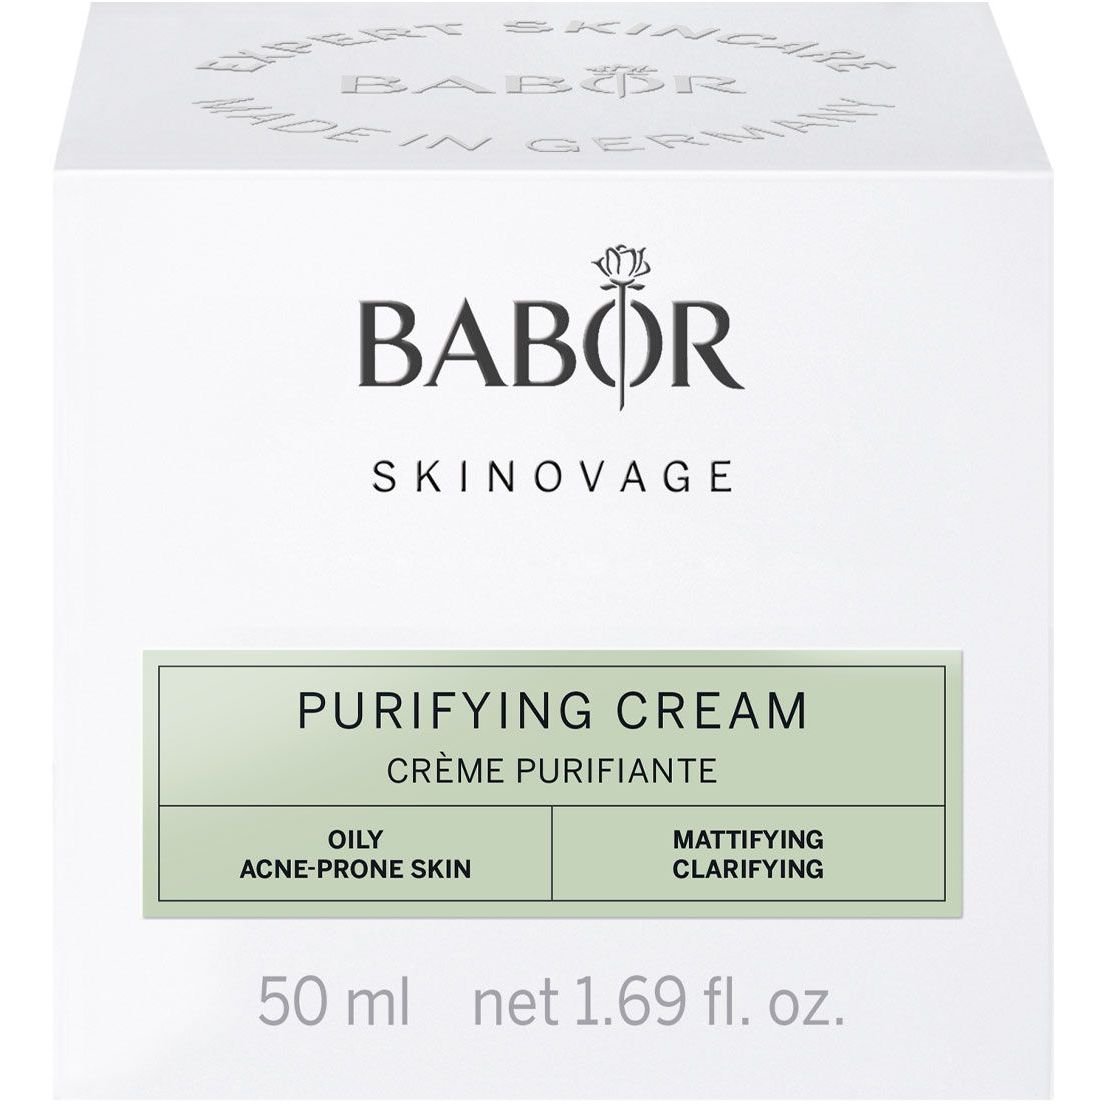 Крем для проблемной кожи Babor Skinovage Purifying Cream 50 мл - фото 2